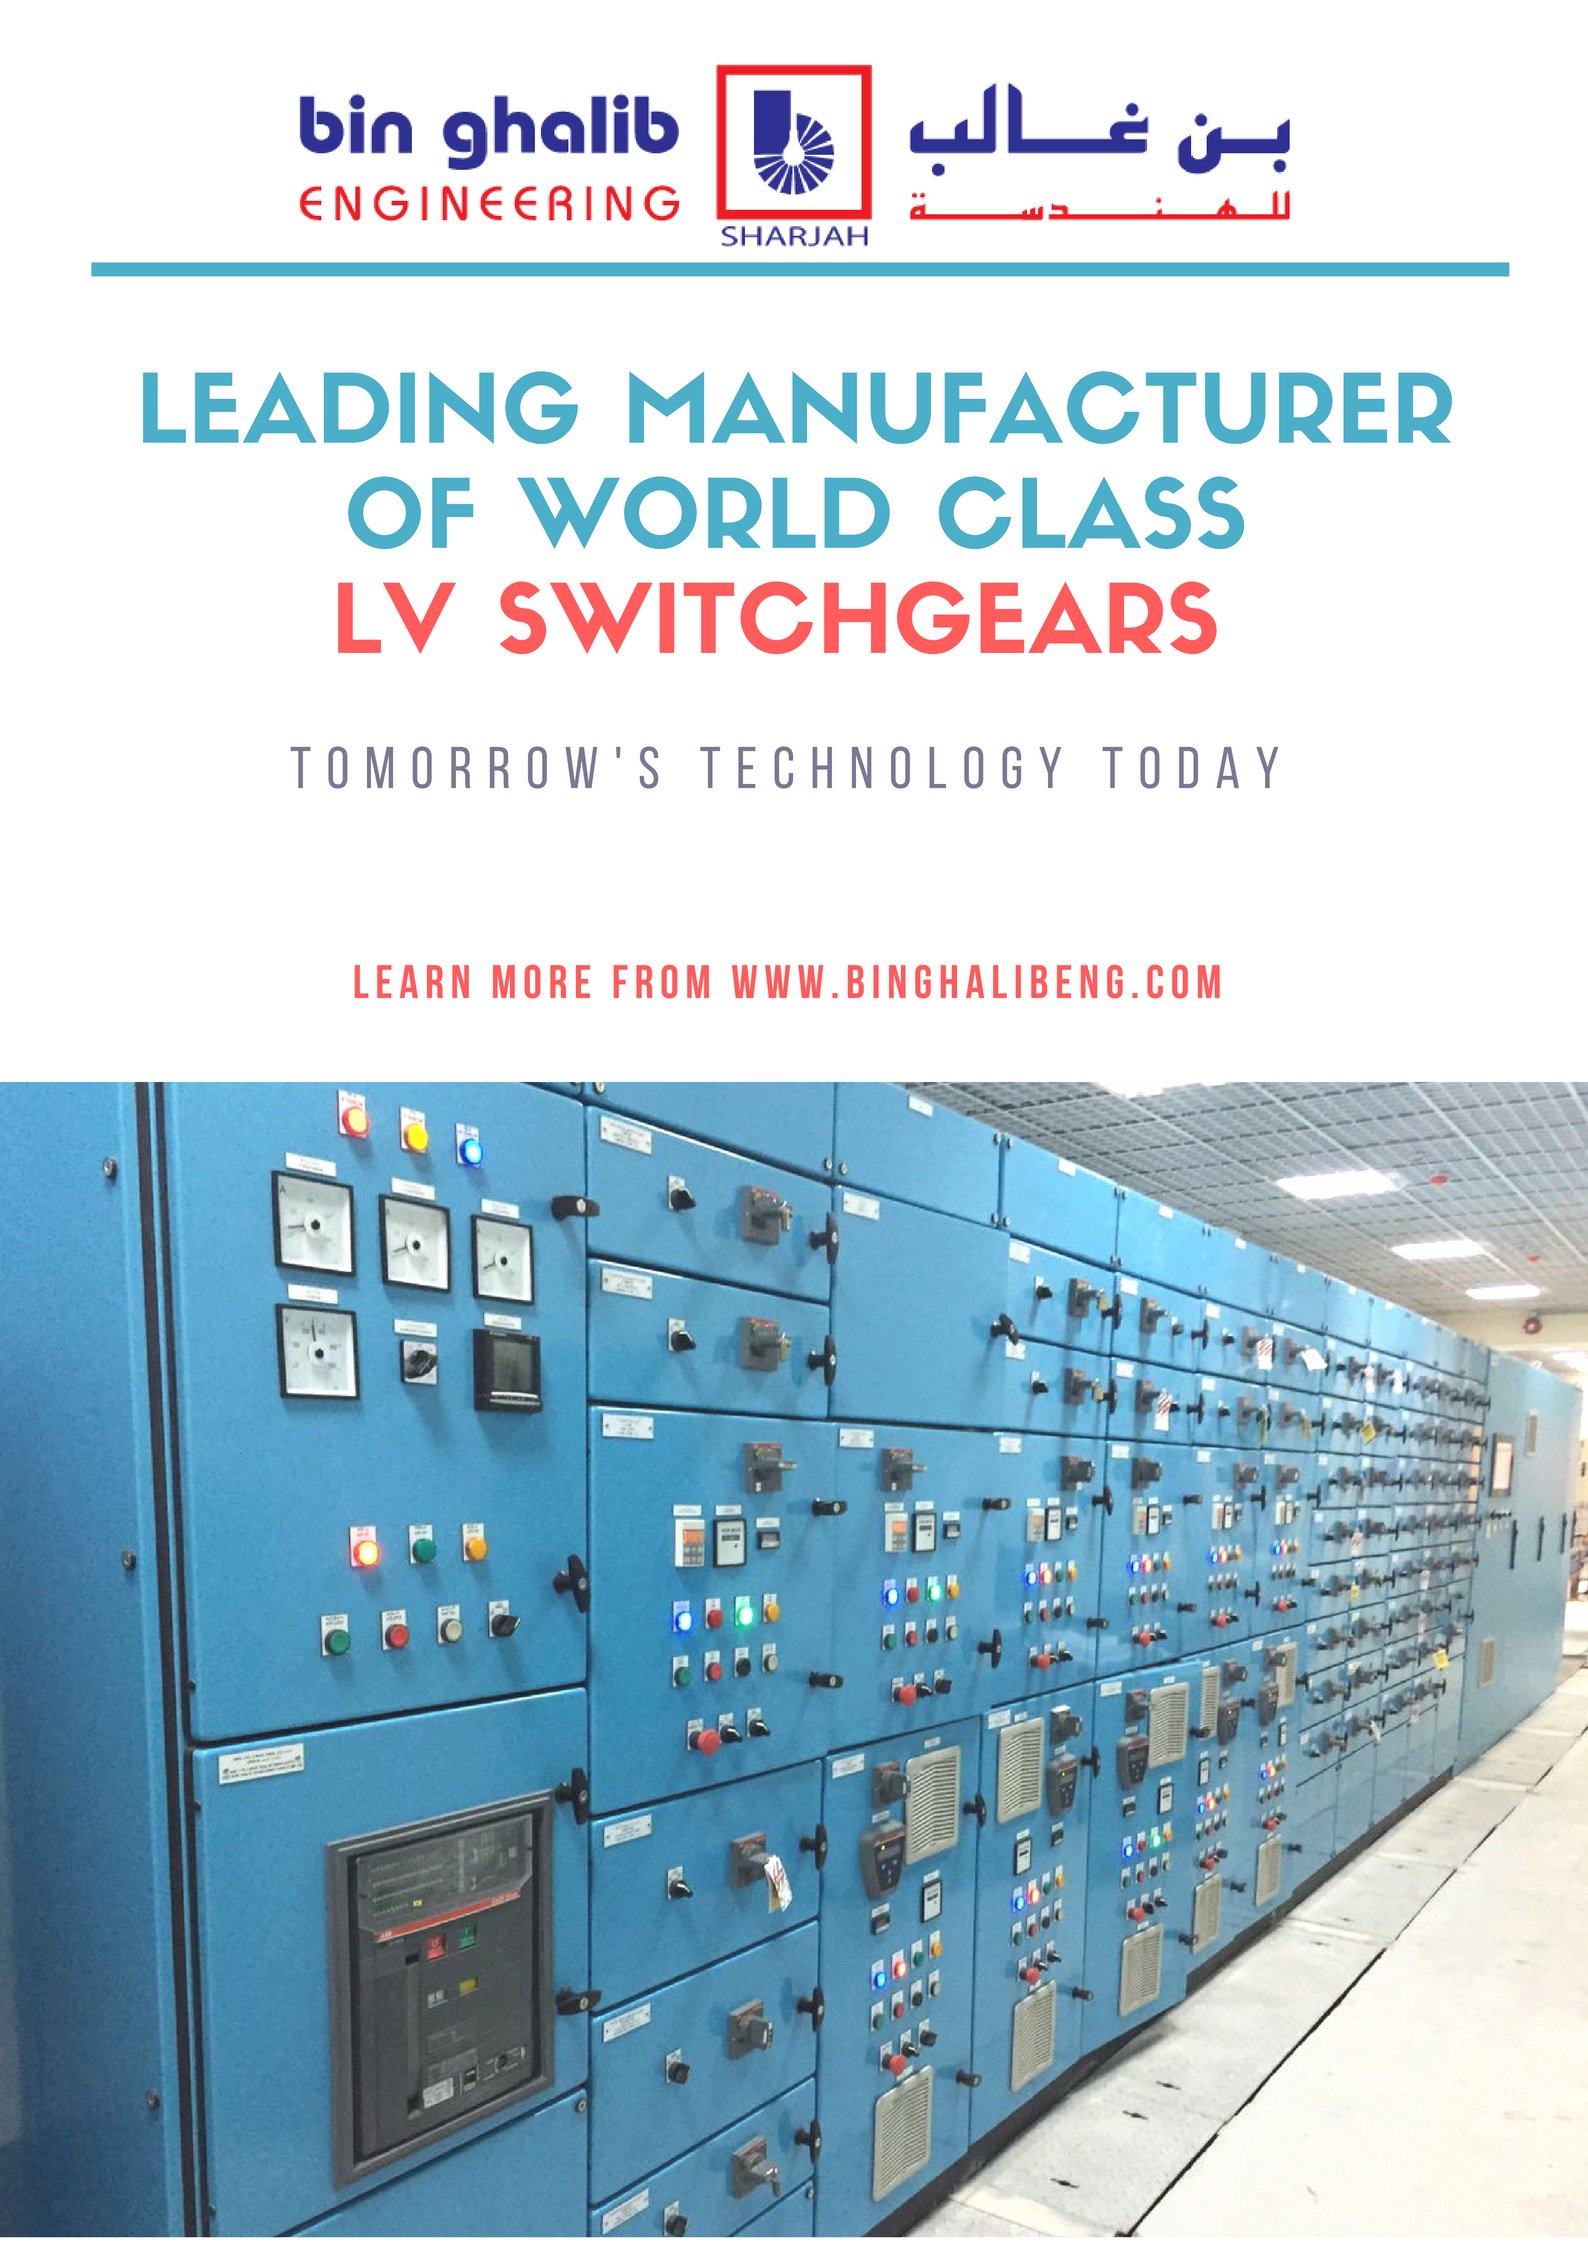 LV Switchgear - Binghalib Engineering - Medium